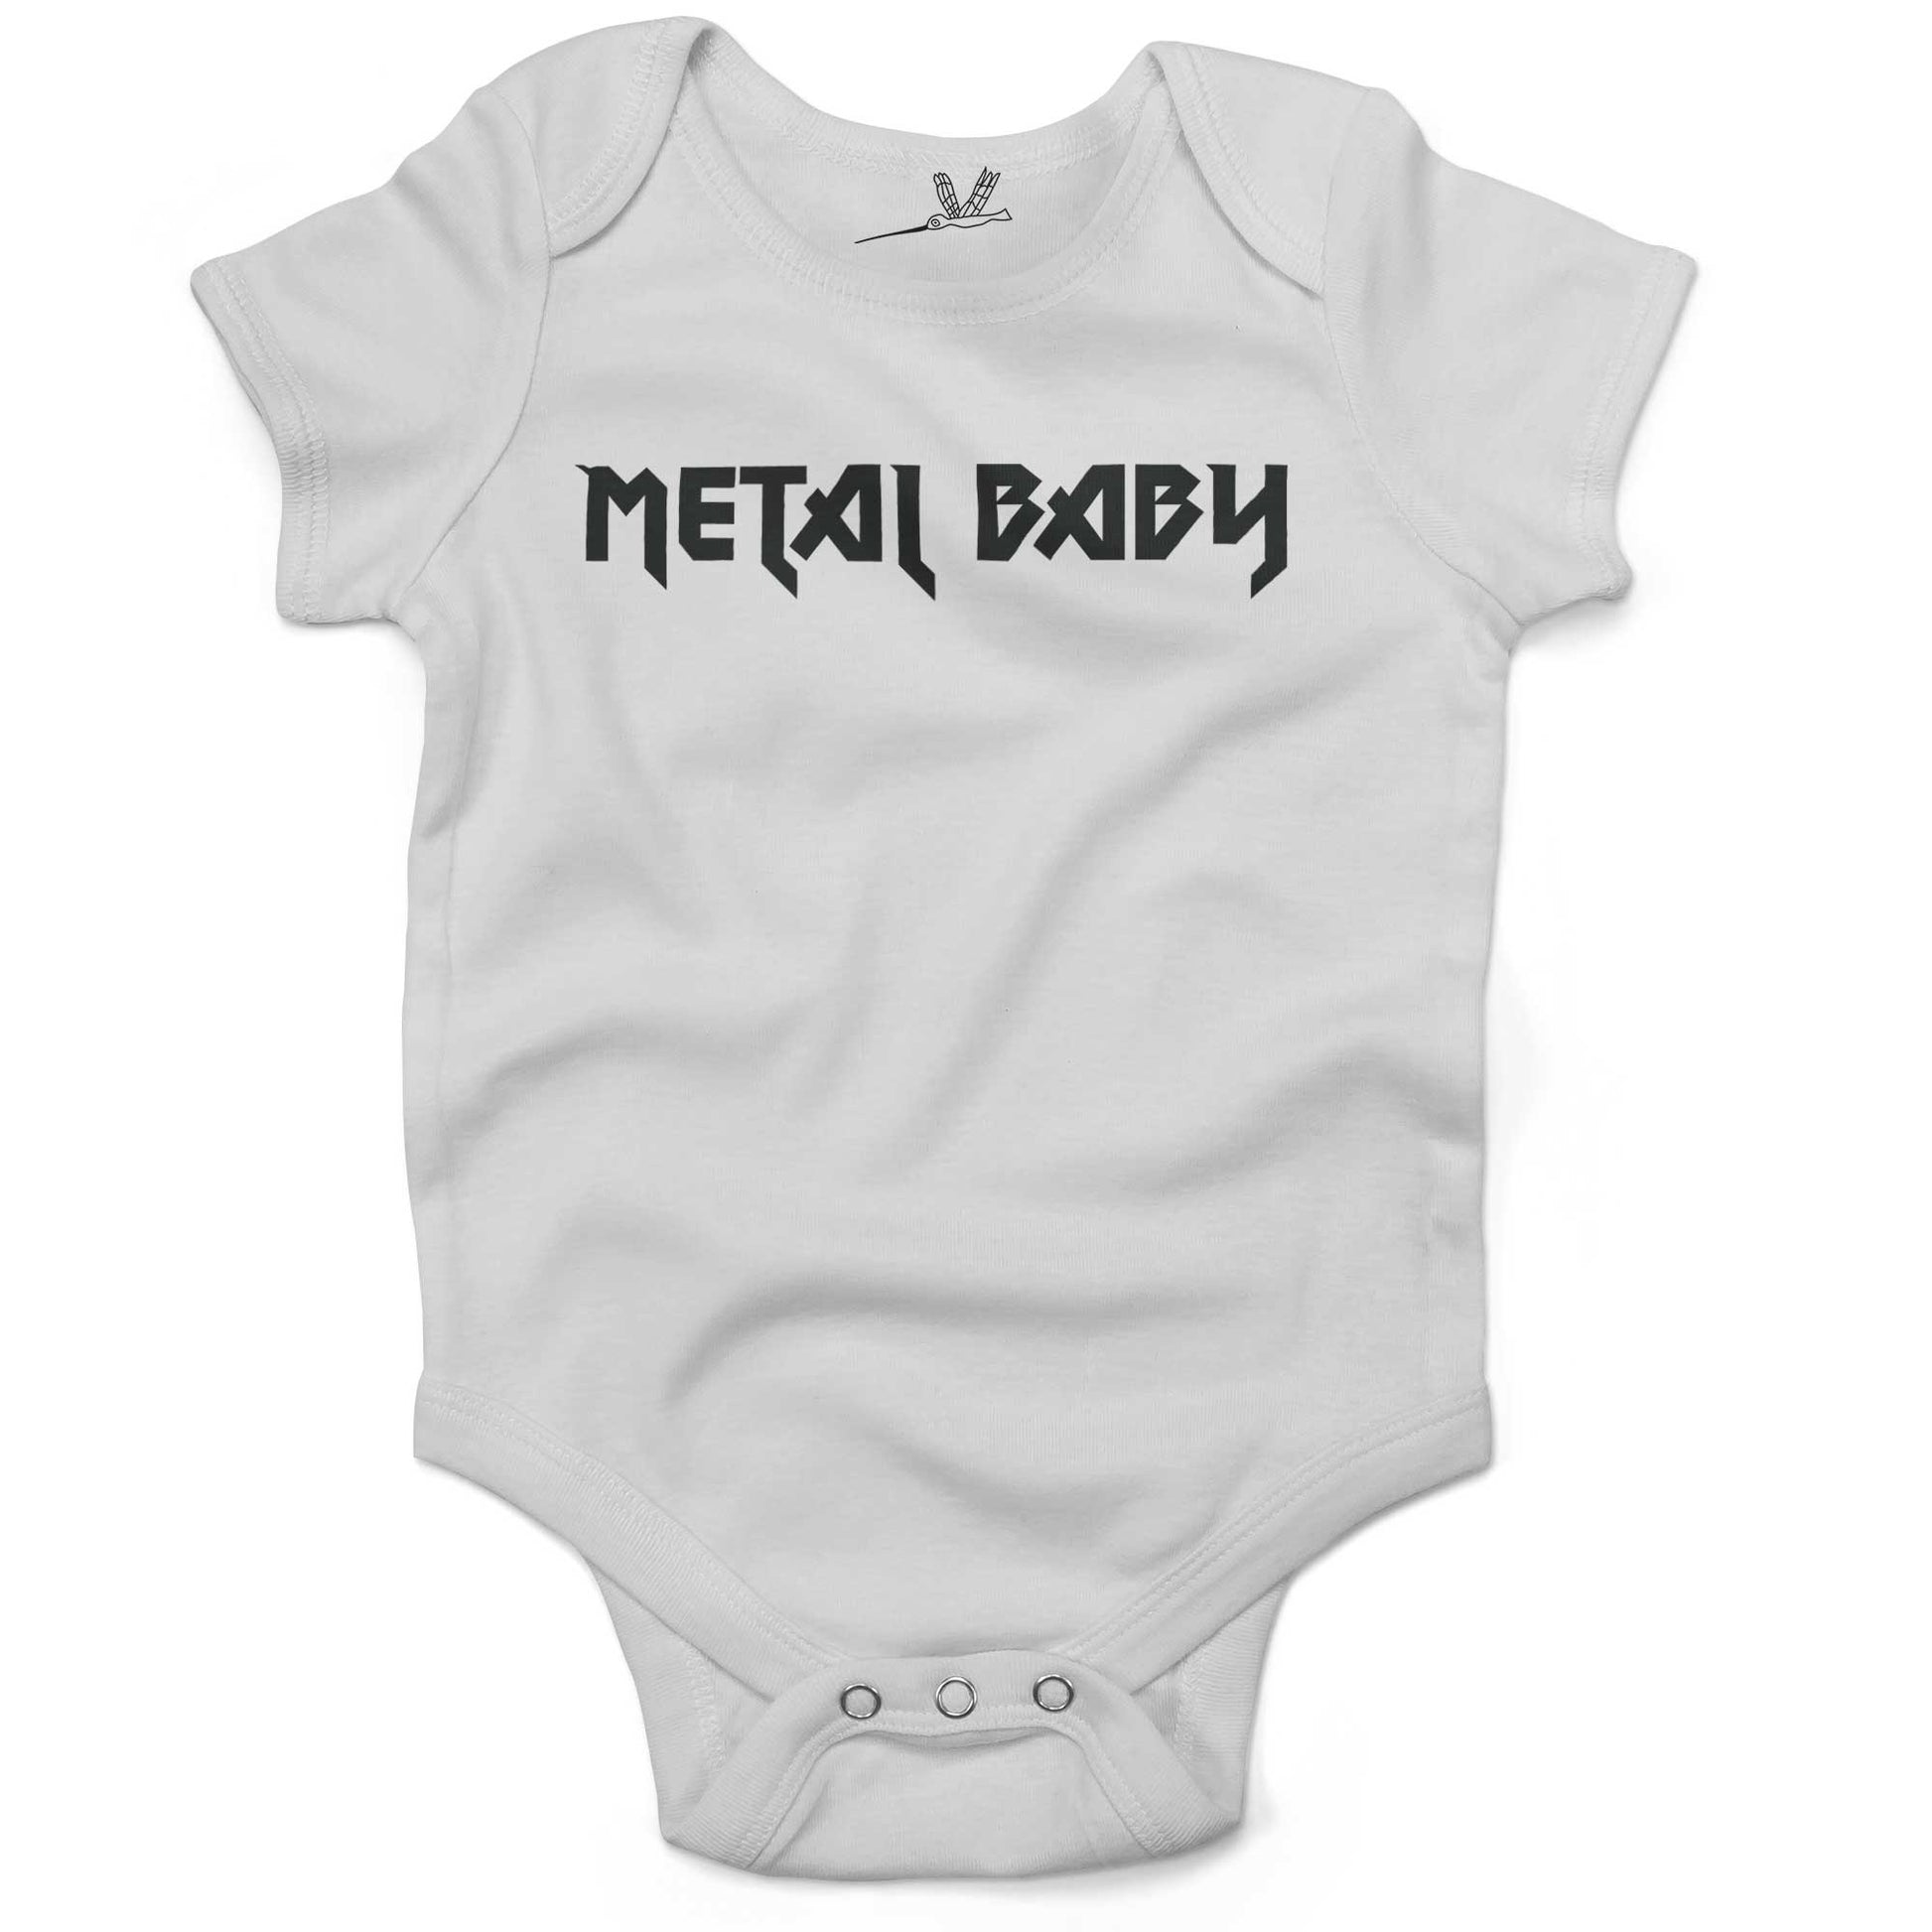 Metal Baby Infant Bodysuit or Raglan Baby Tee-White-3-6 months